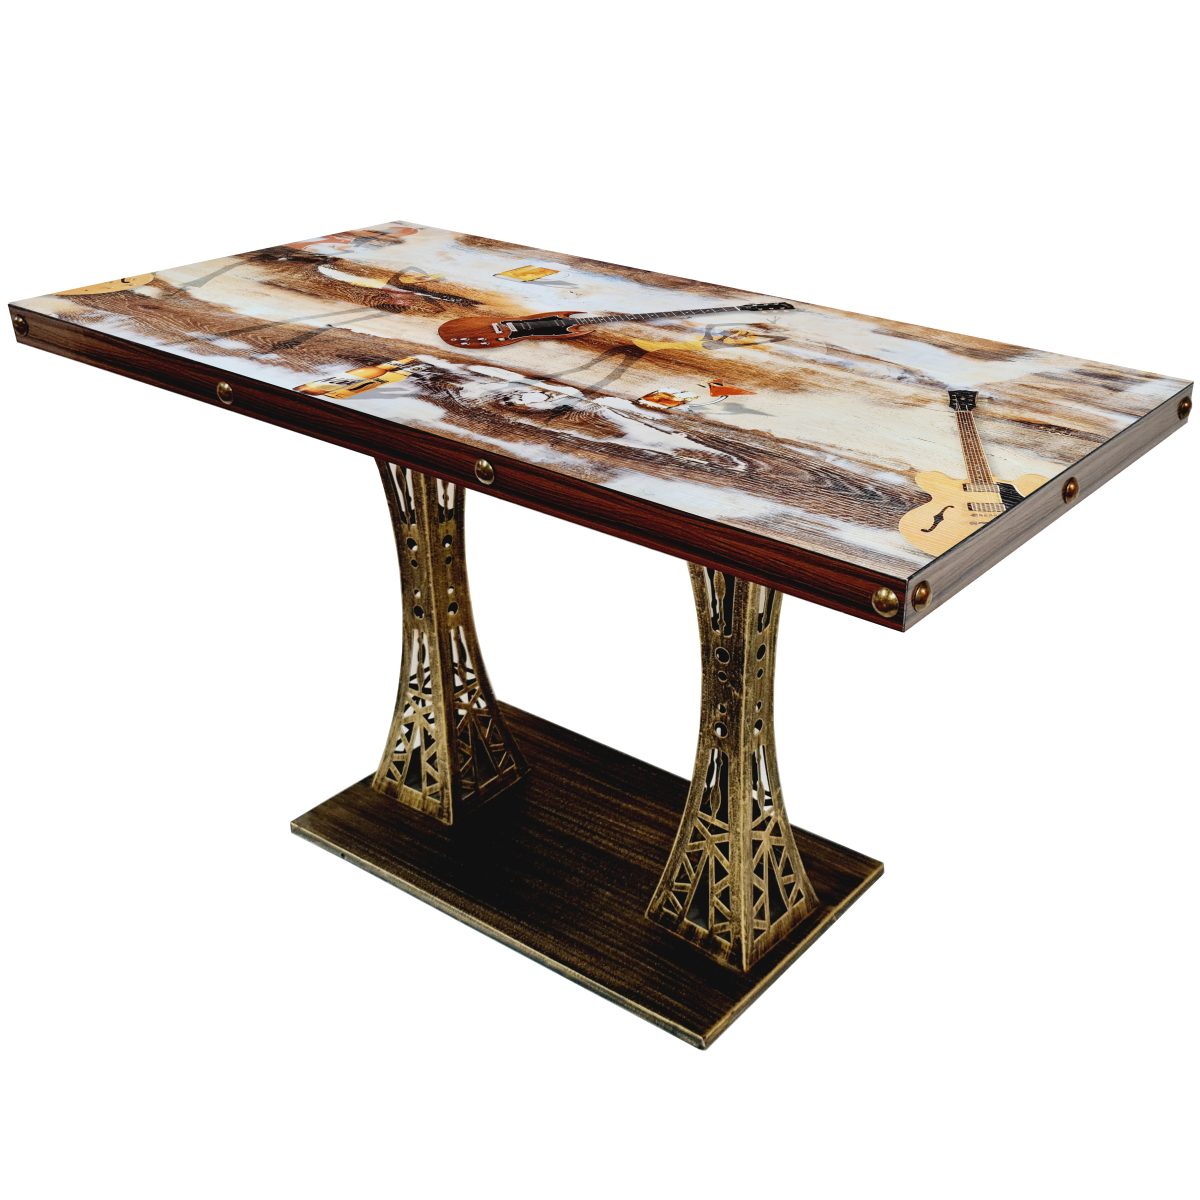 Solid Wood Printed Table